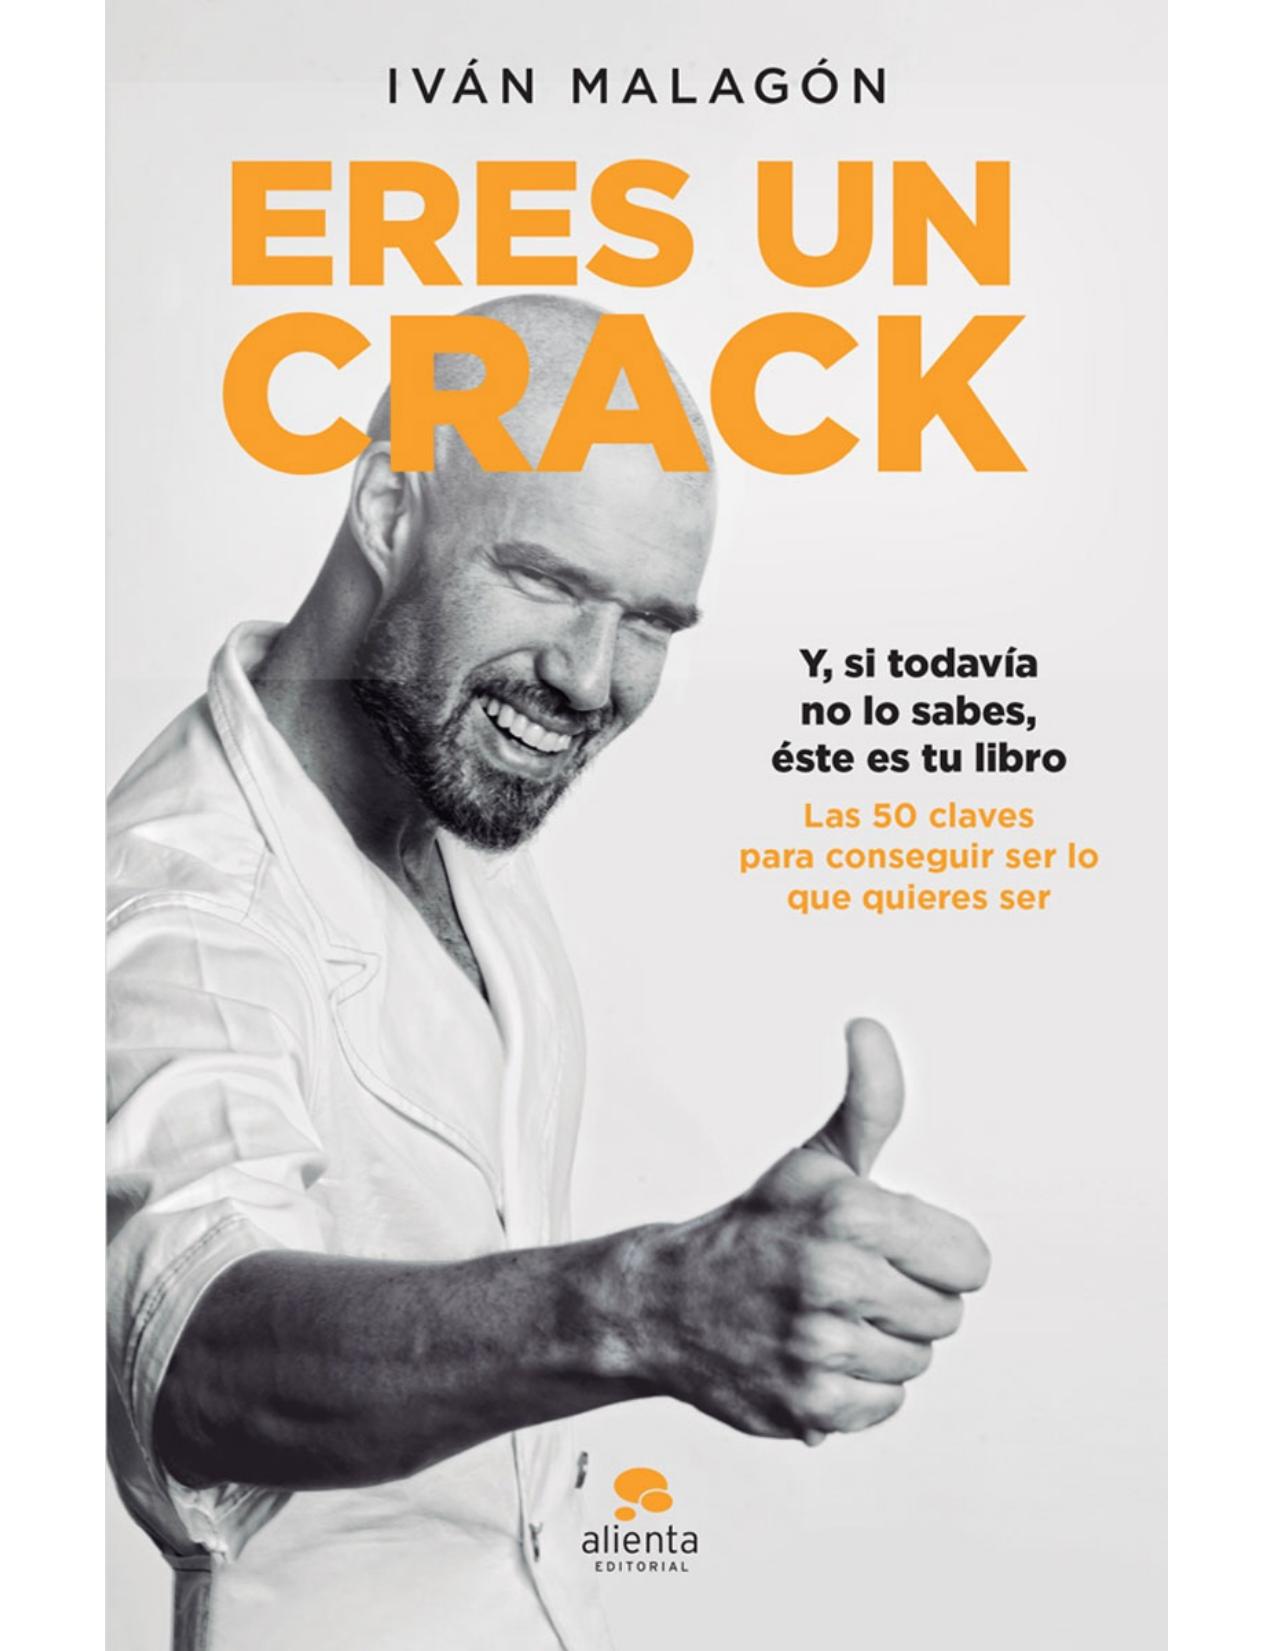 Eres un crack (Spanish Edition)